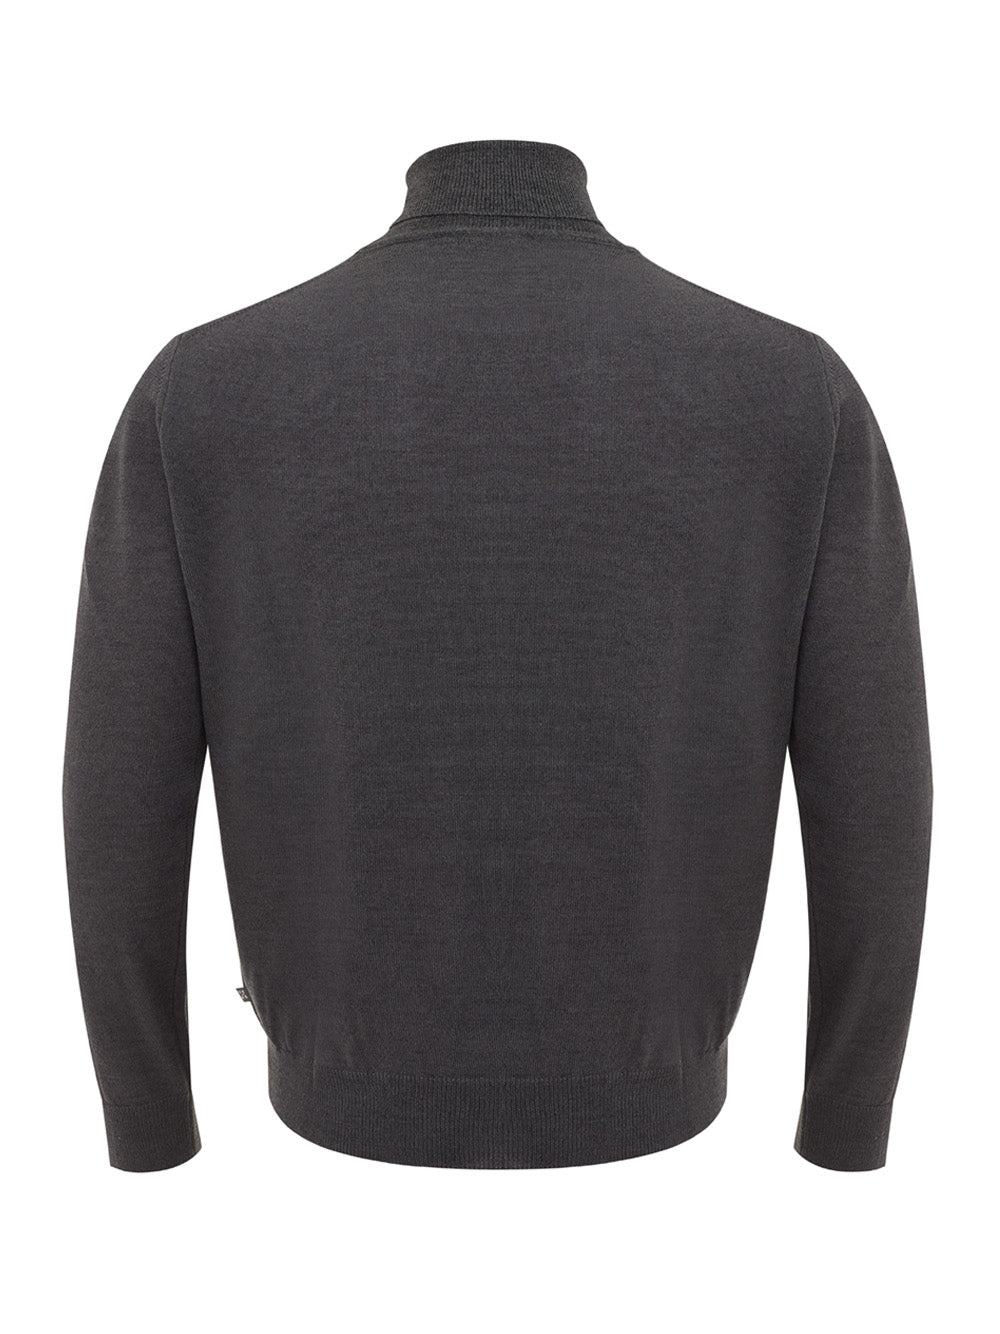 FERRANTE Sleek Anthracite Grey Wool Turtleneck Sweater